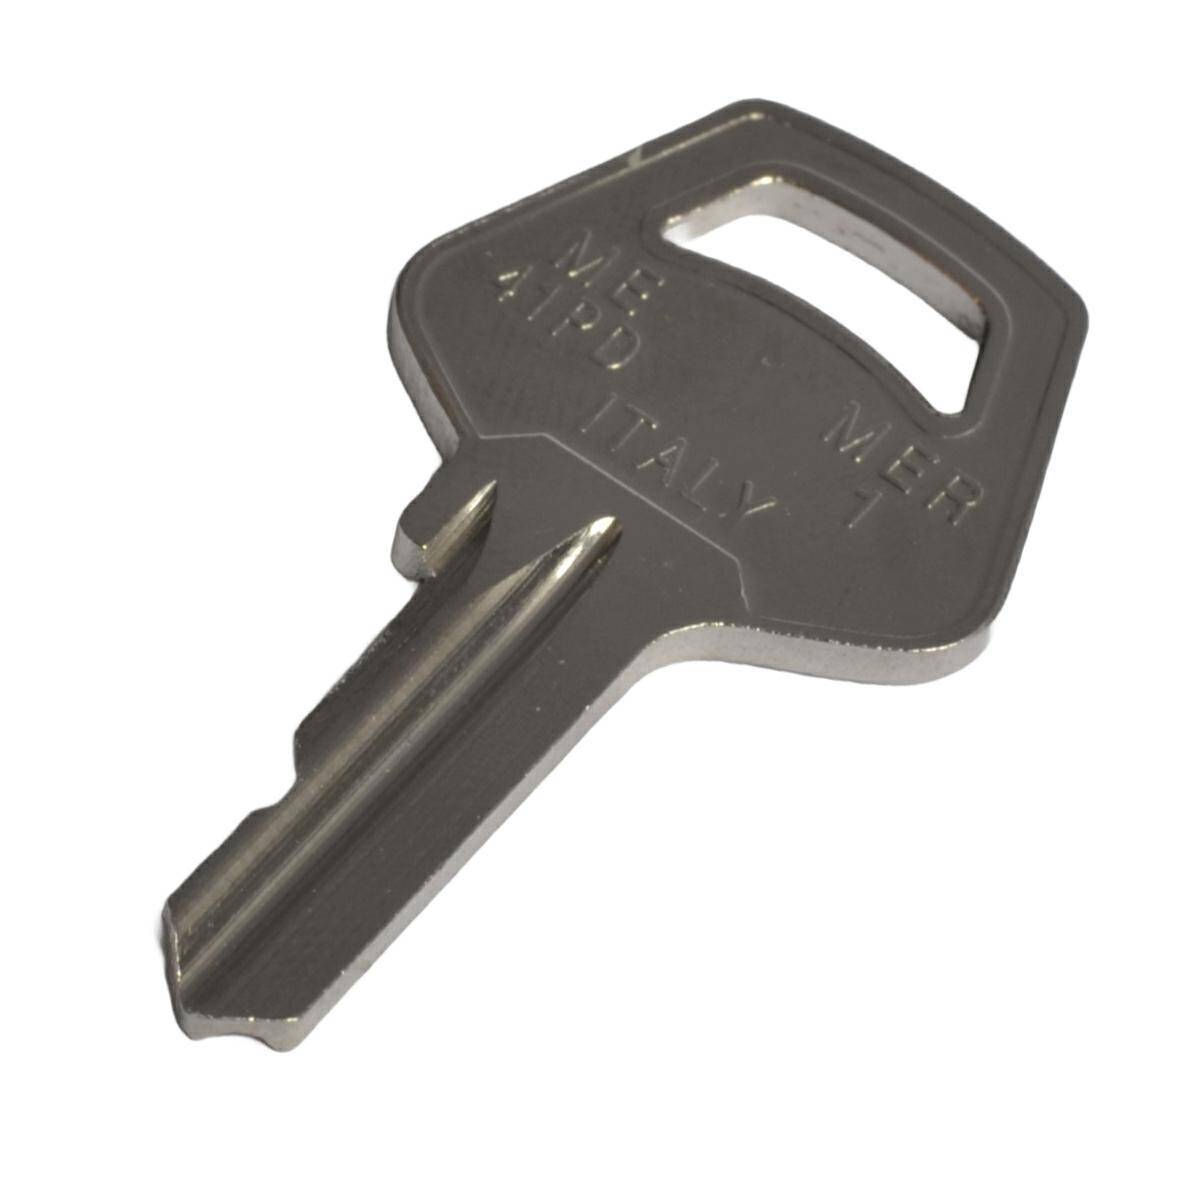 Key to unlock the drive - Nice